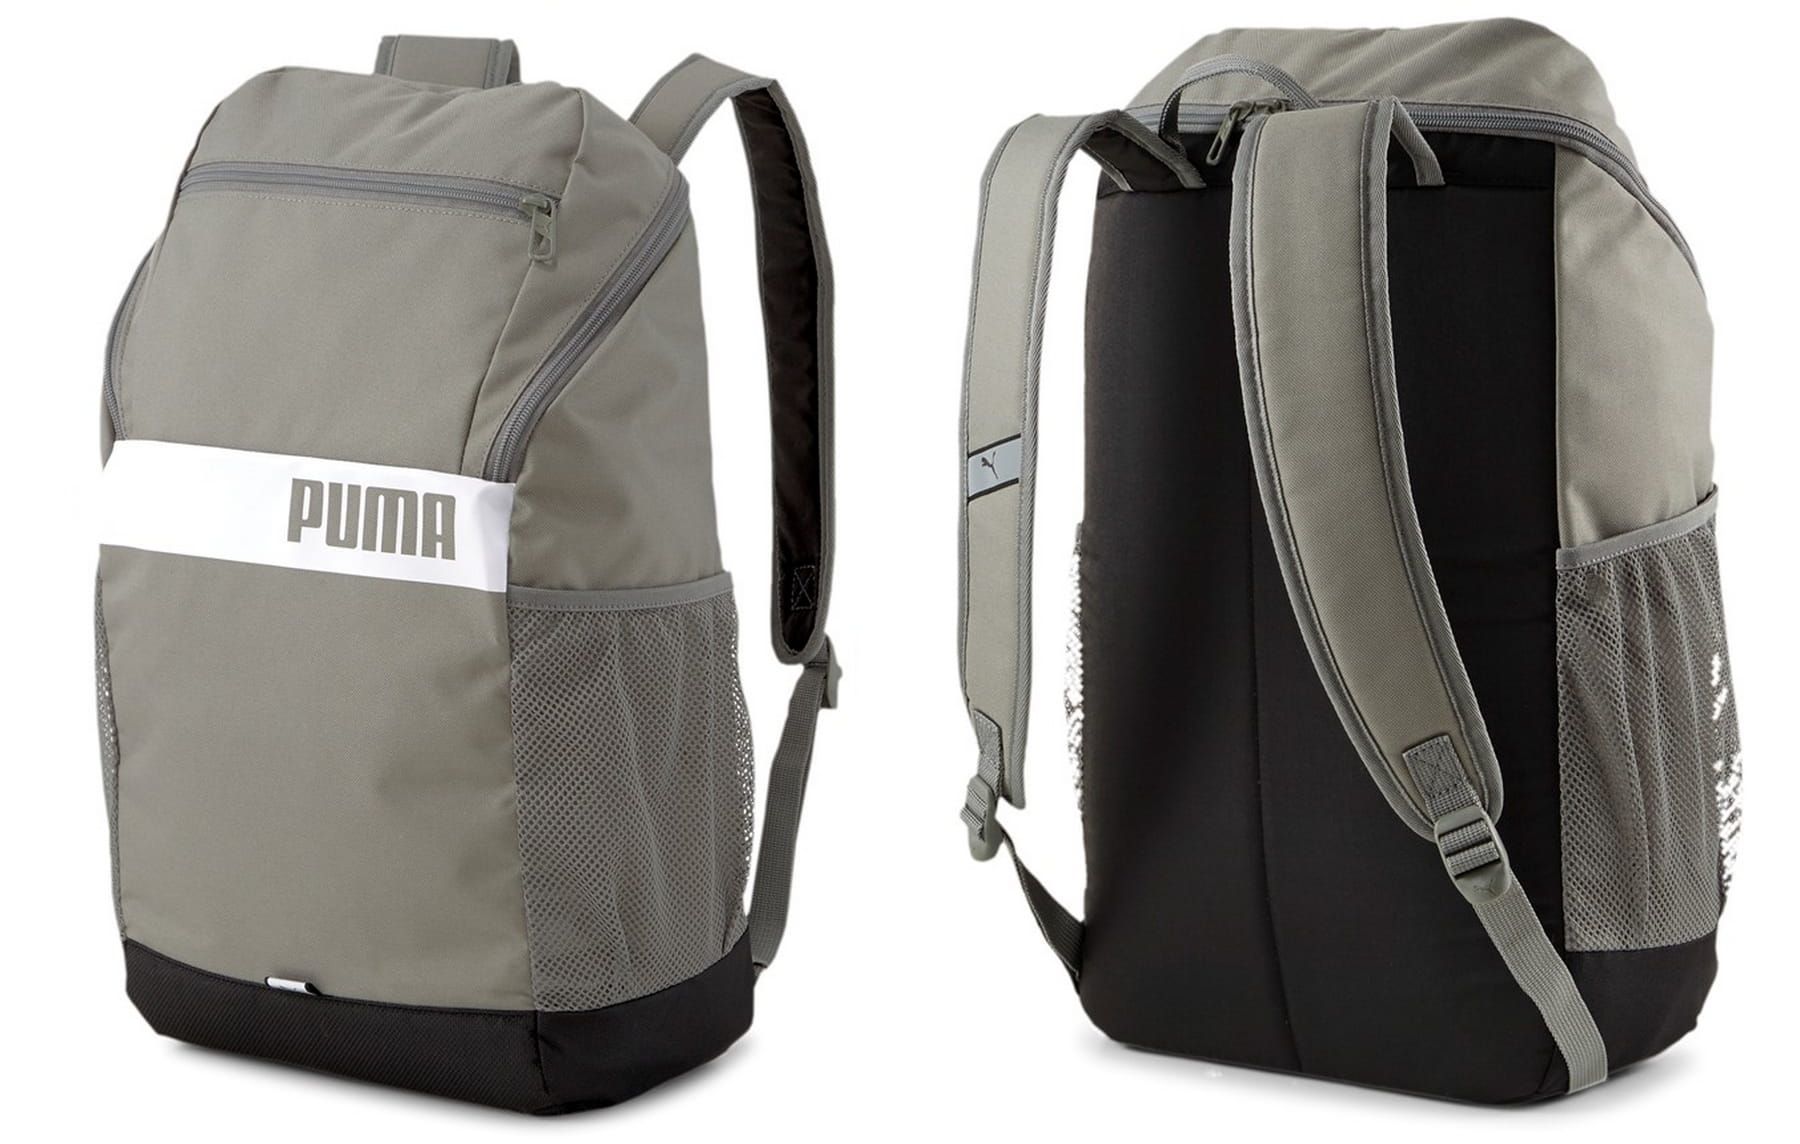 Puma Batoh Plus Backpack 077292 04